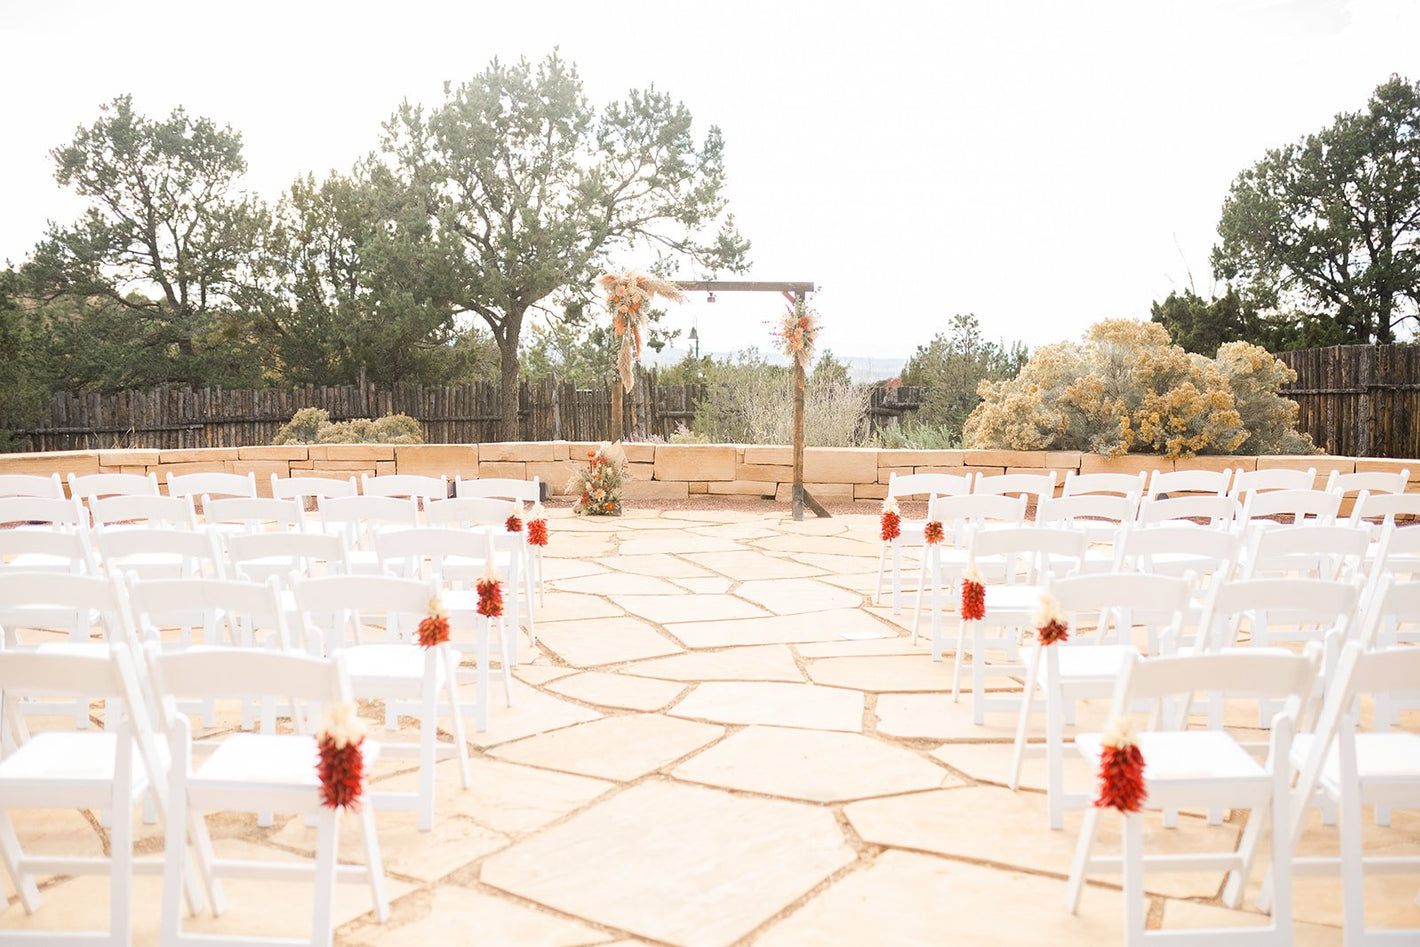 Artichokes & Pomegranates wedding ceremony flowers and arch in Santa Fe